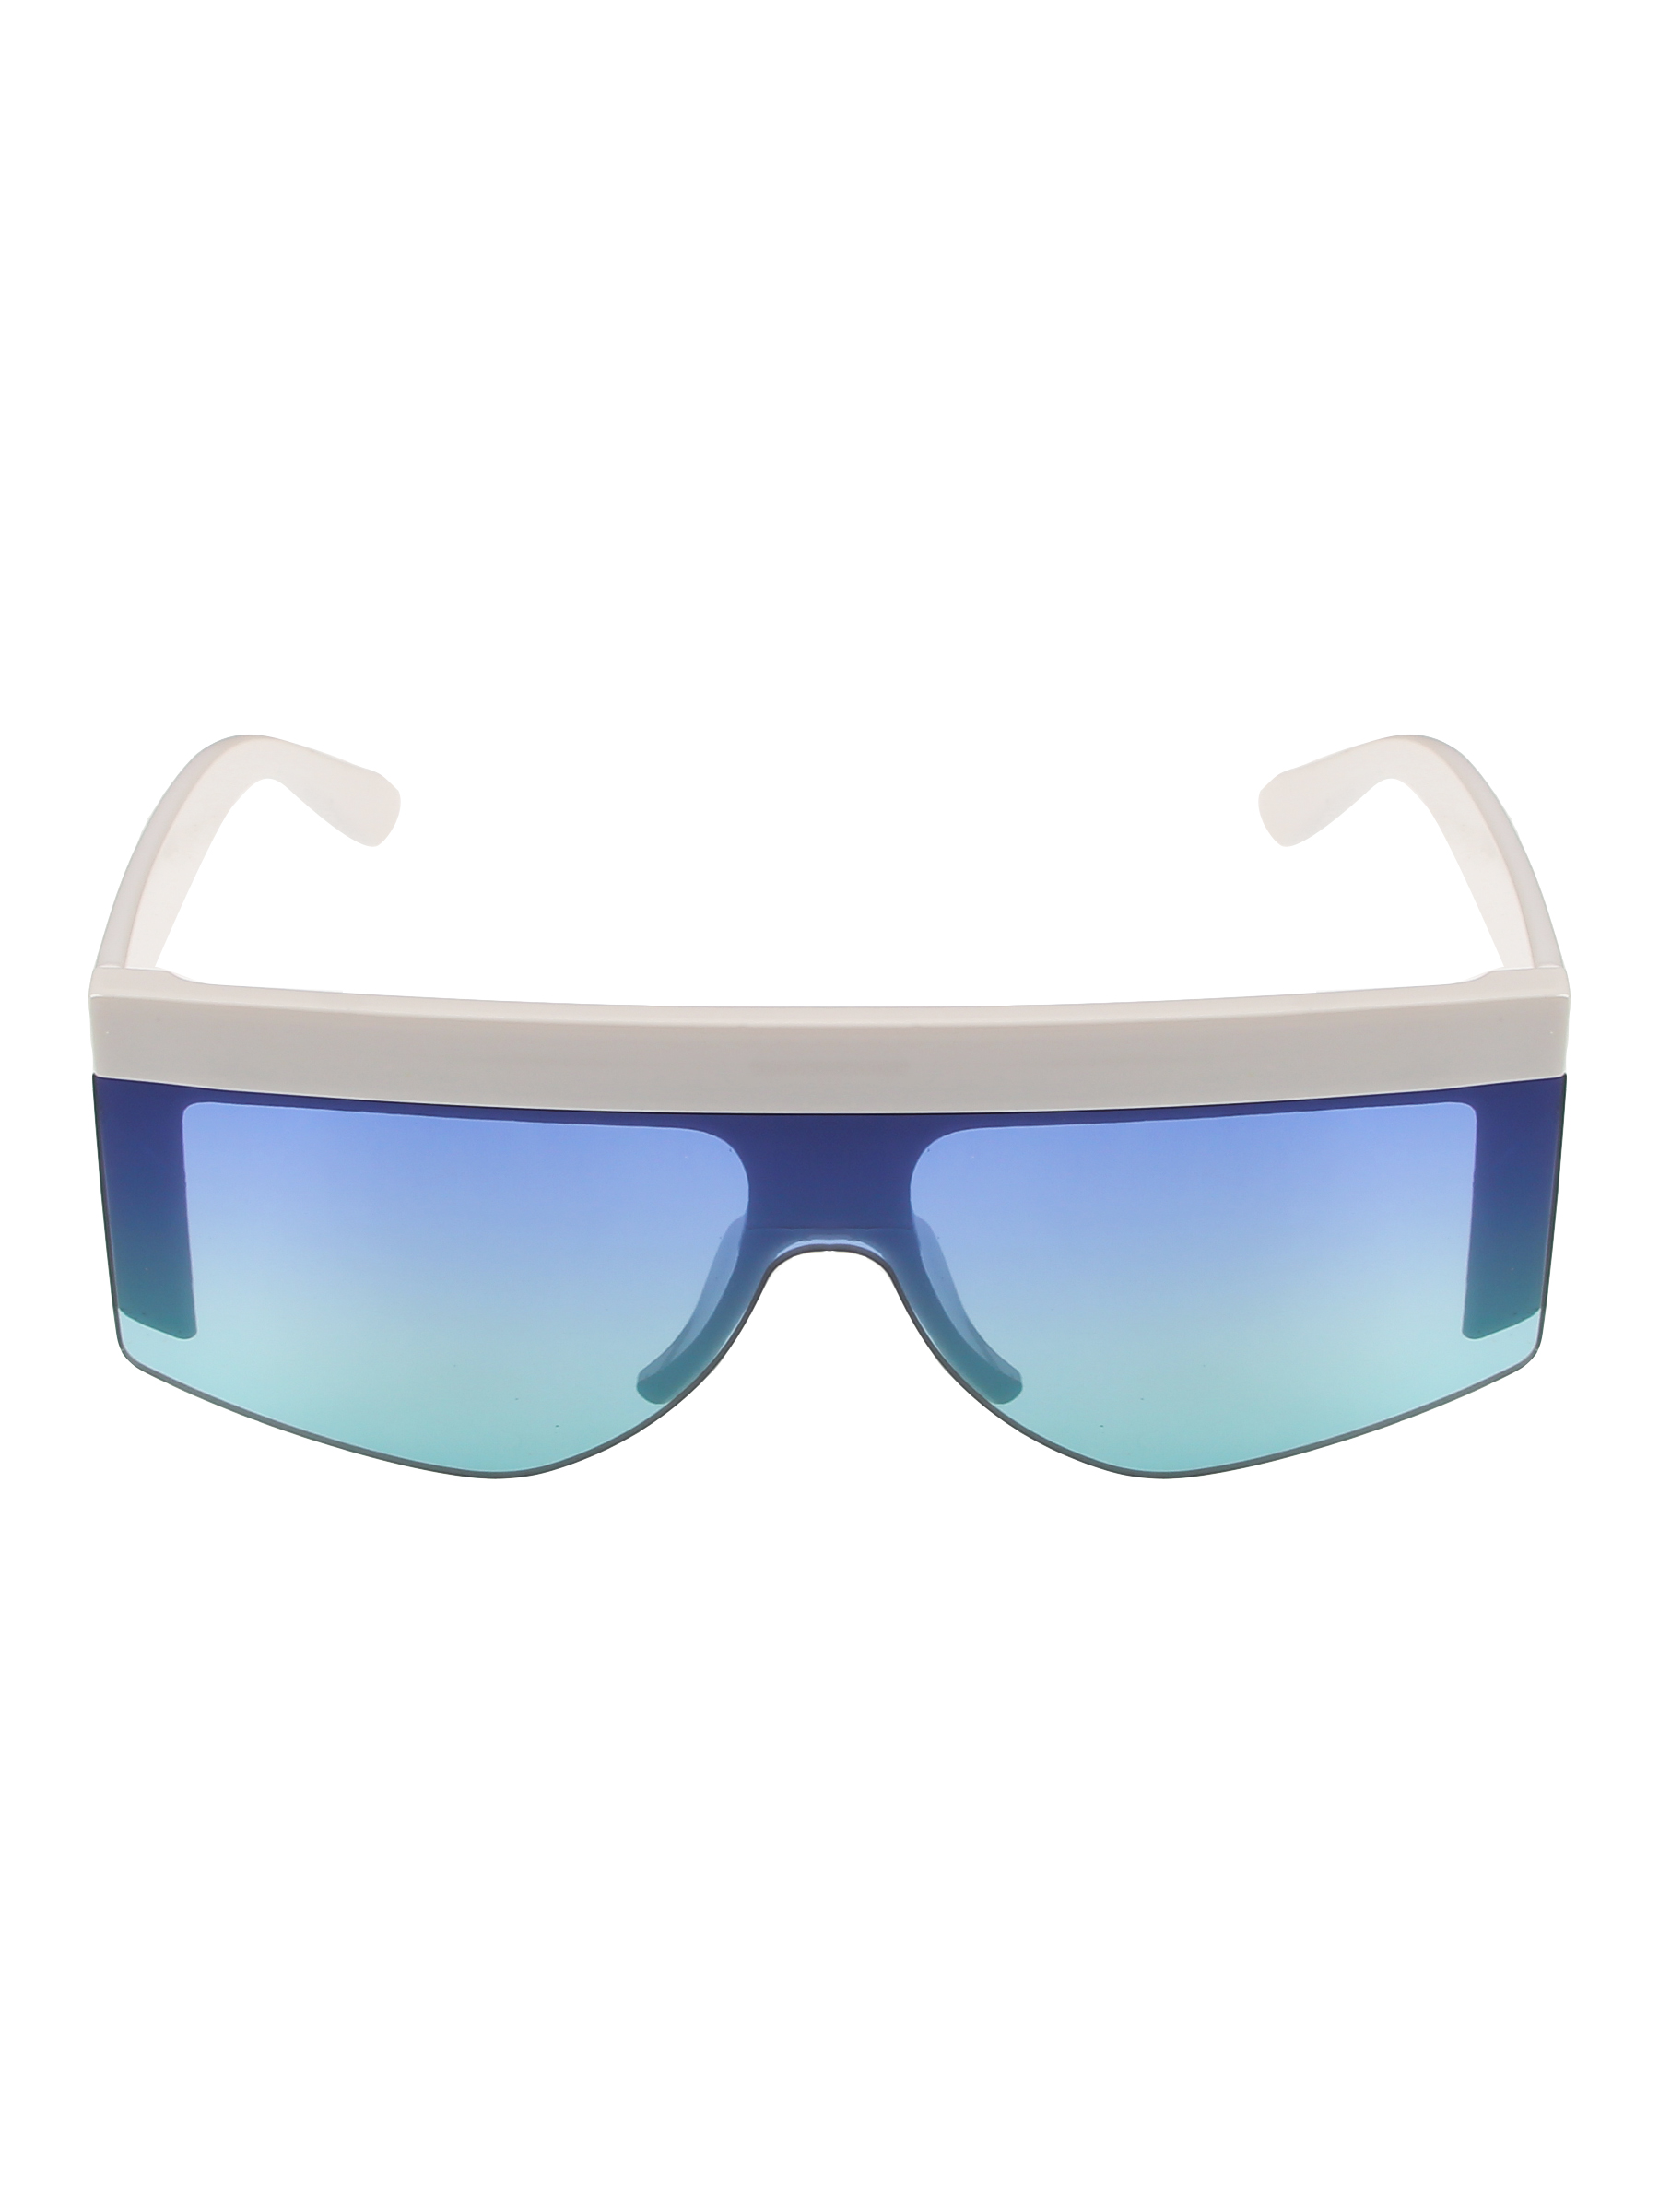 Солнцезащитные очки женские Pretty Mania NDP008 синие